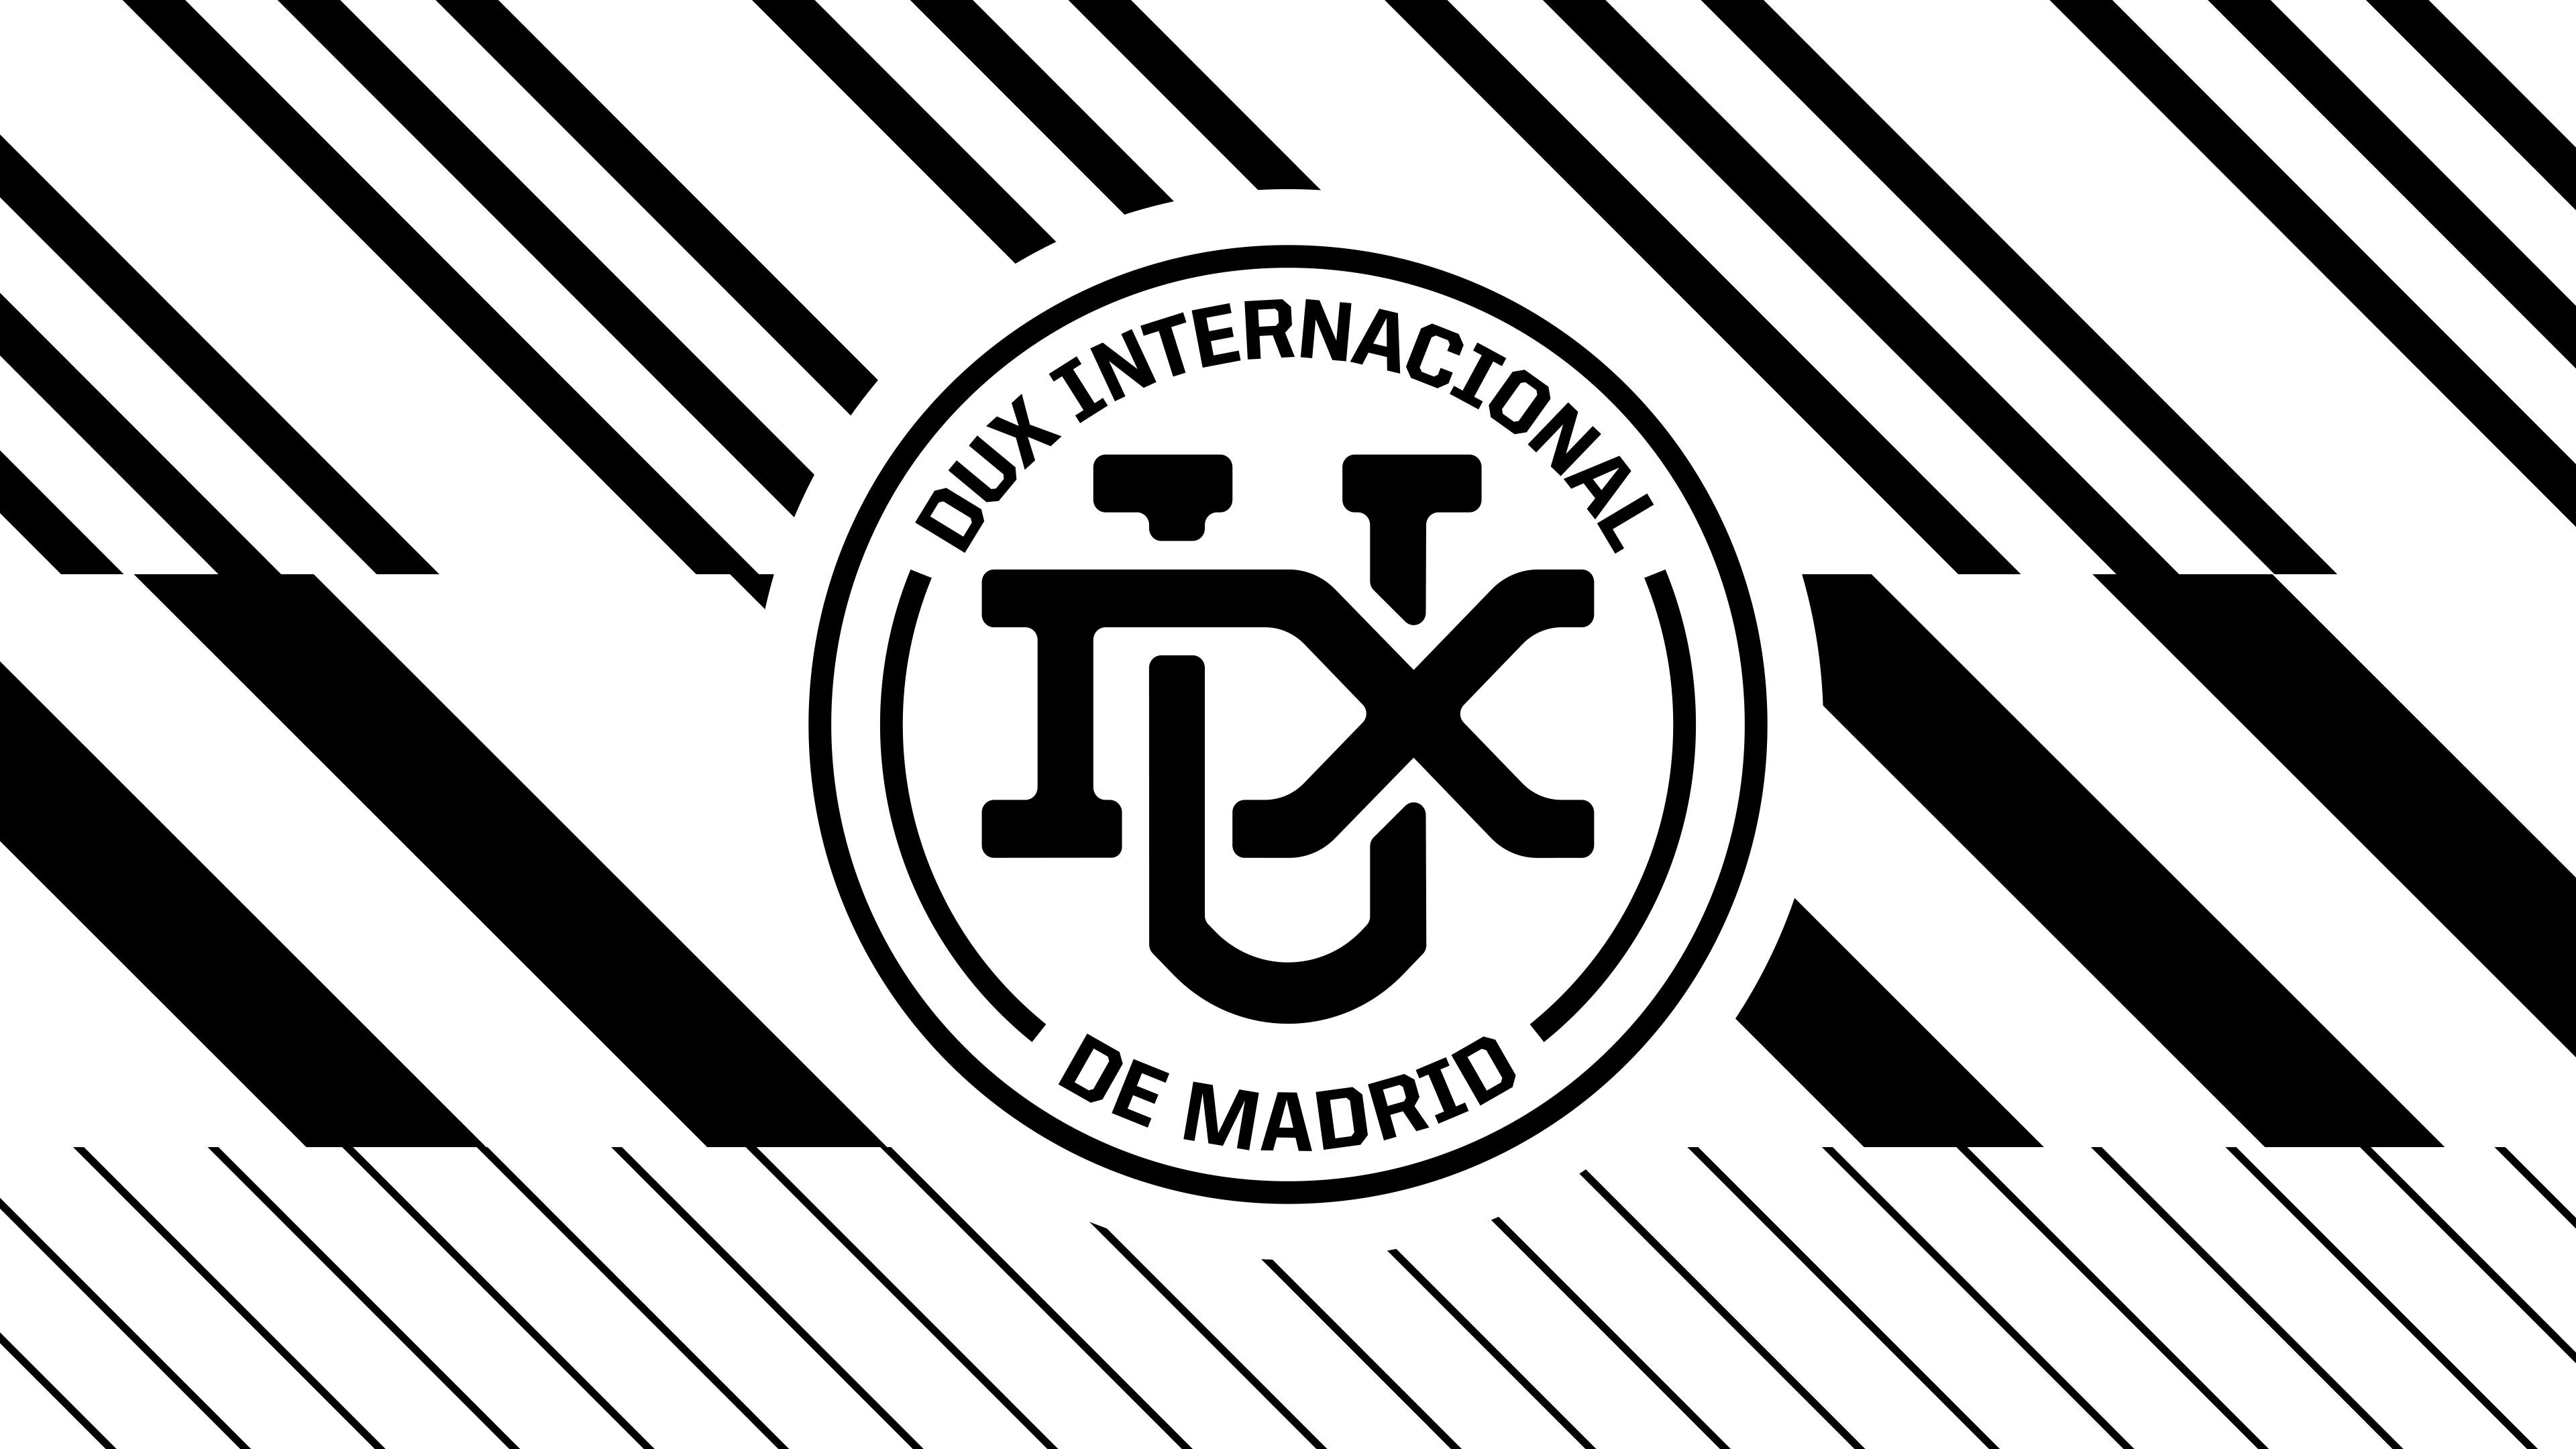 DUX Gaming Internacional Madrid